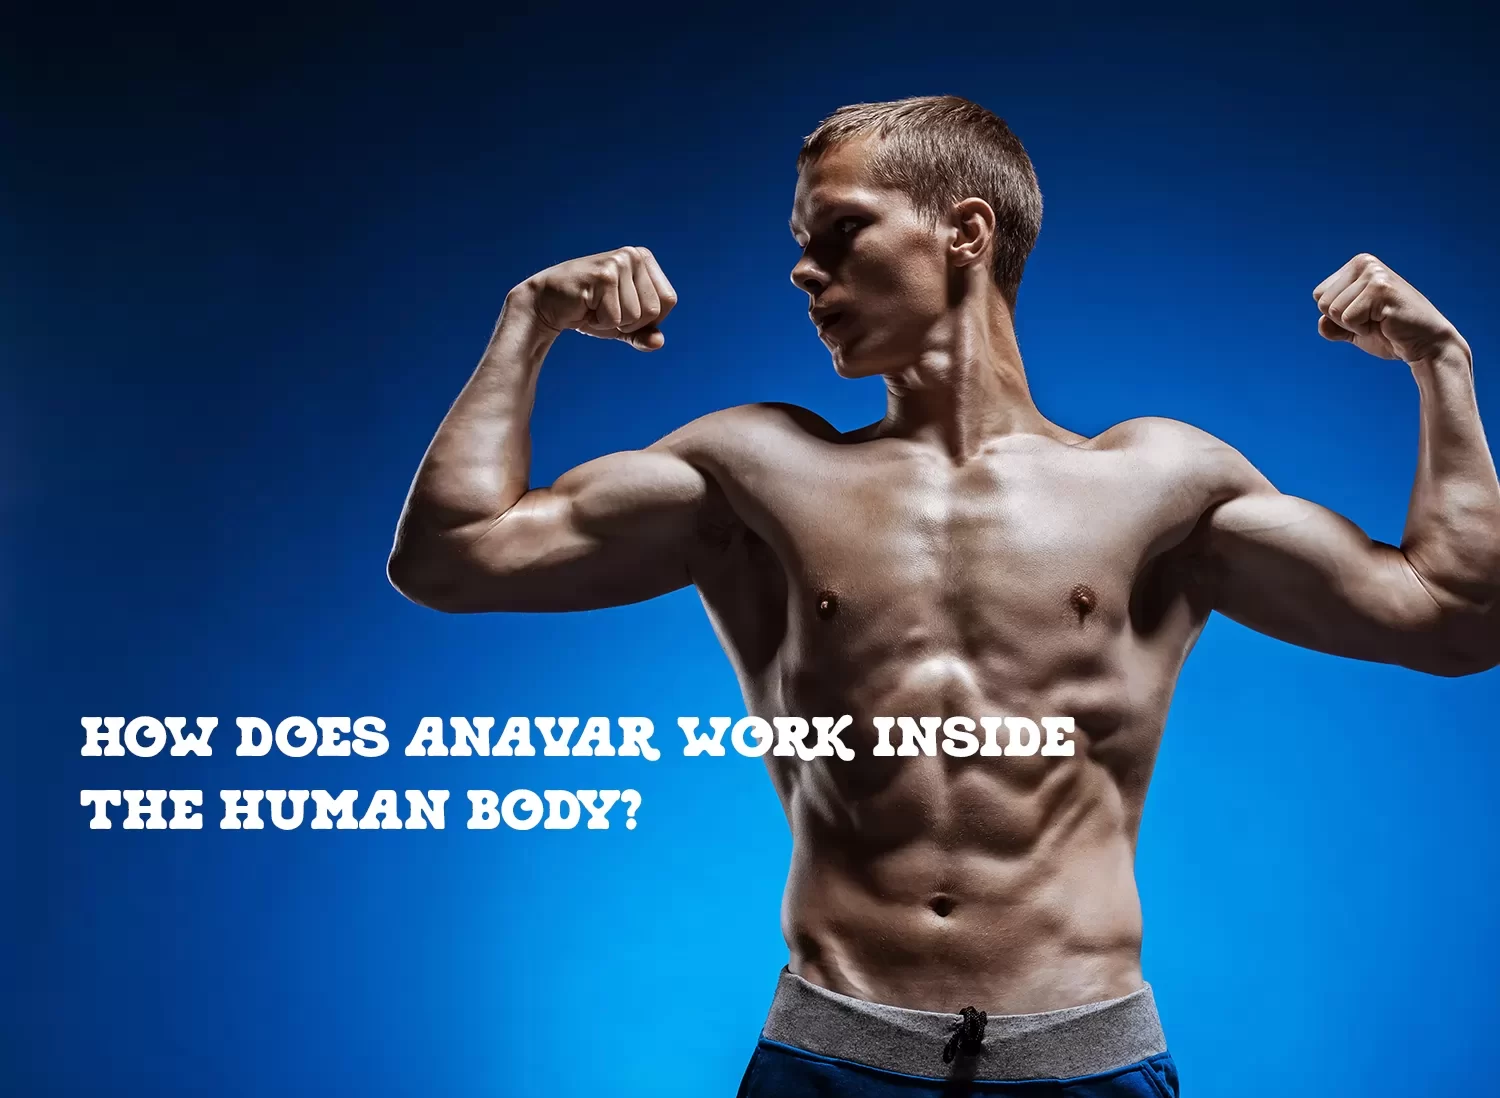 How does Anavar work